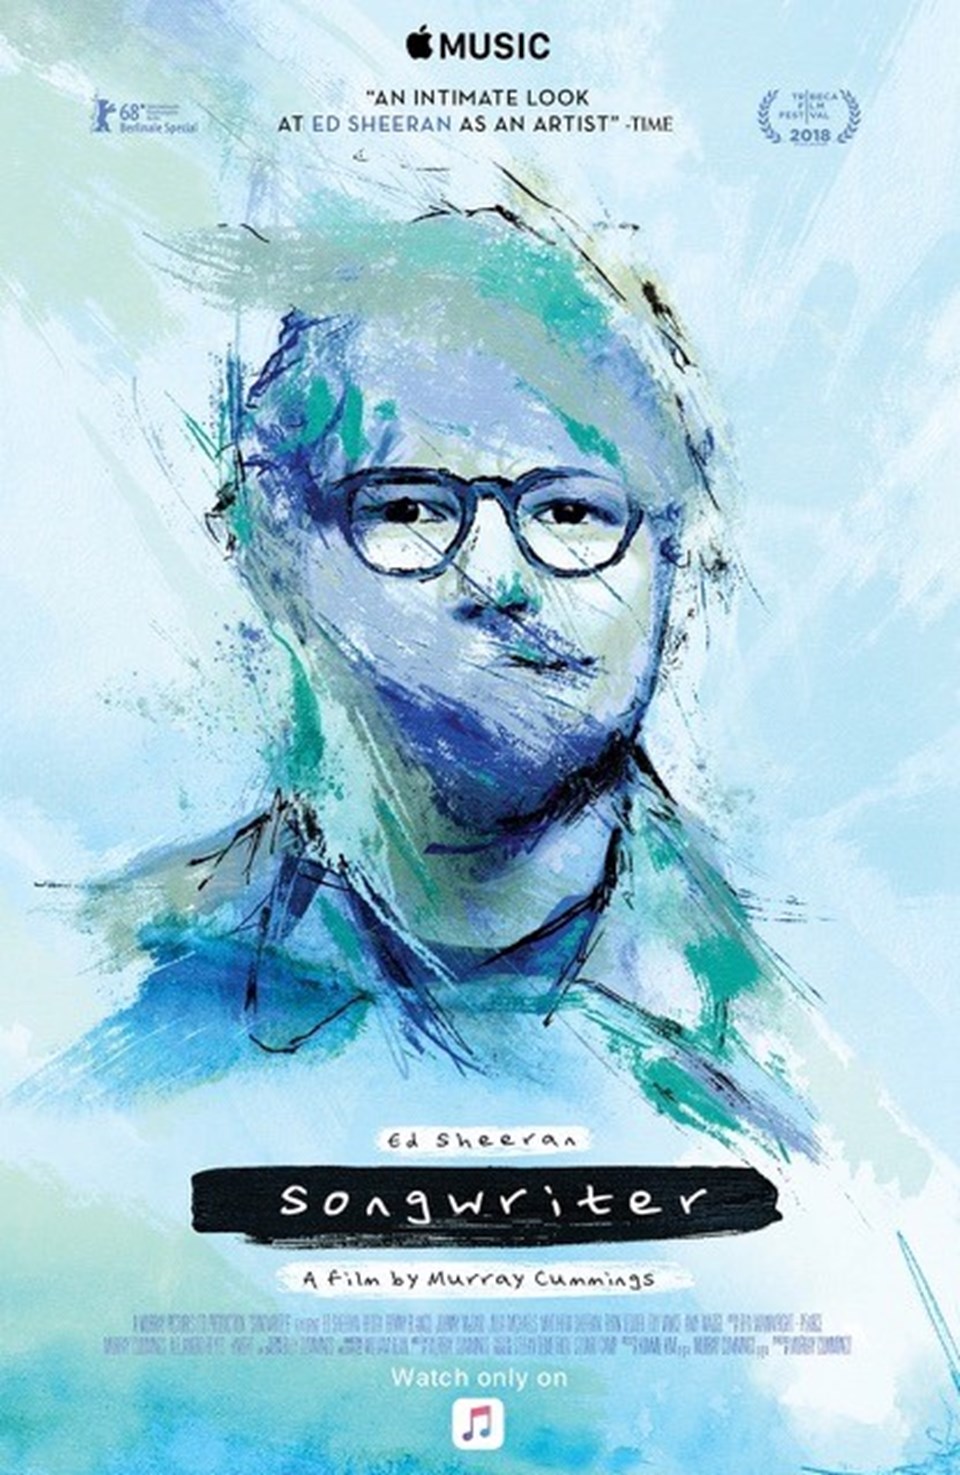 Ed Sheeran Songwriter belgeseli 28 Ağustos’ta Apple Music’te - 1